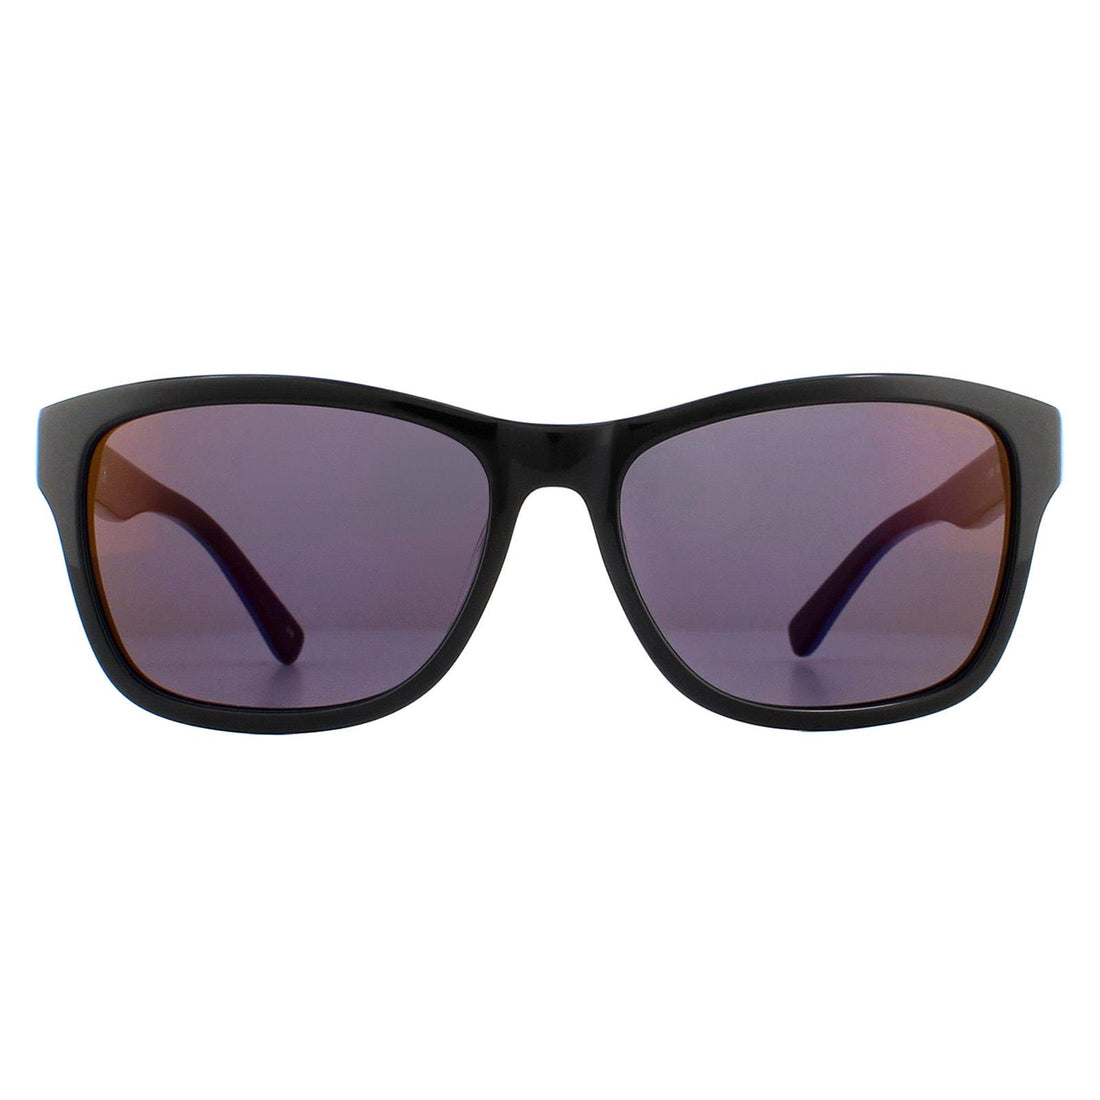 Lacoste L683S Sunglasses Black Blue Purple